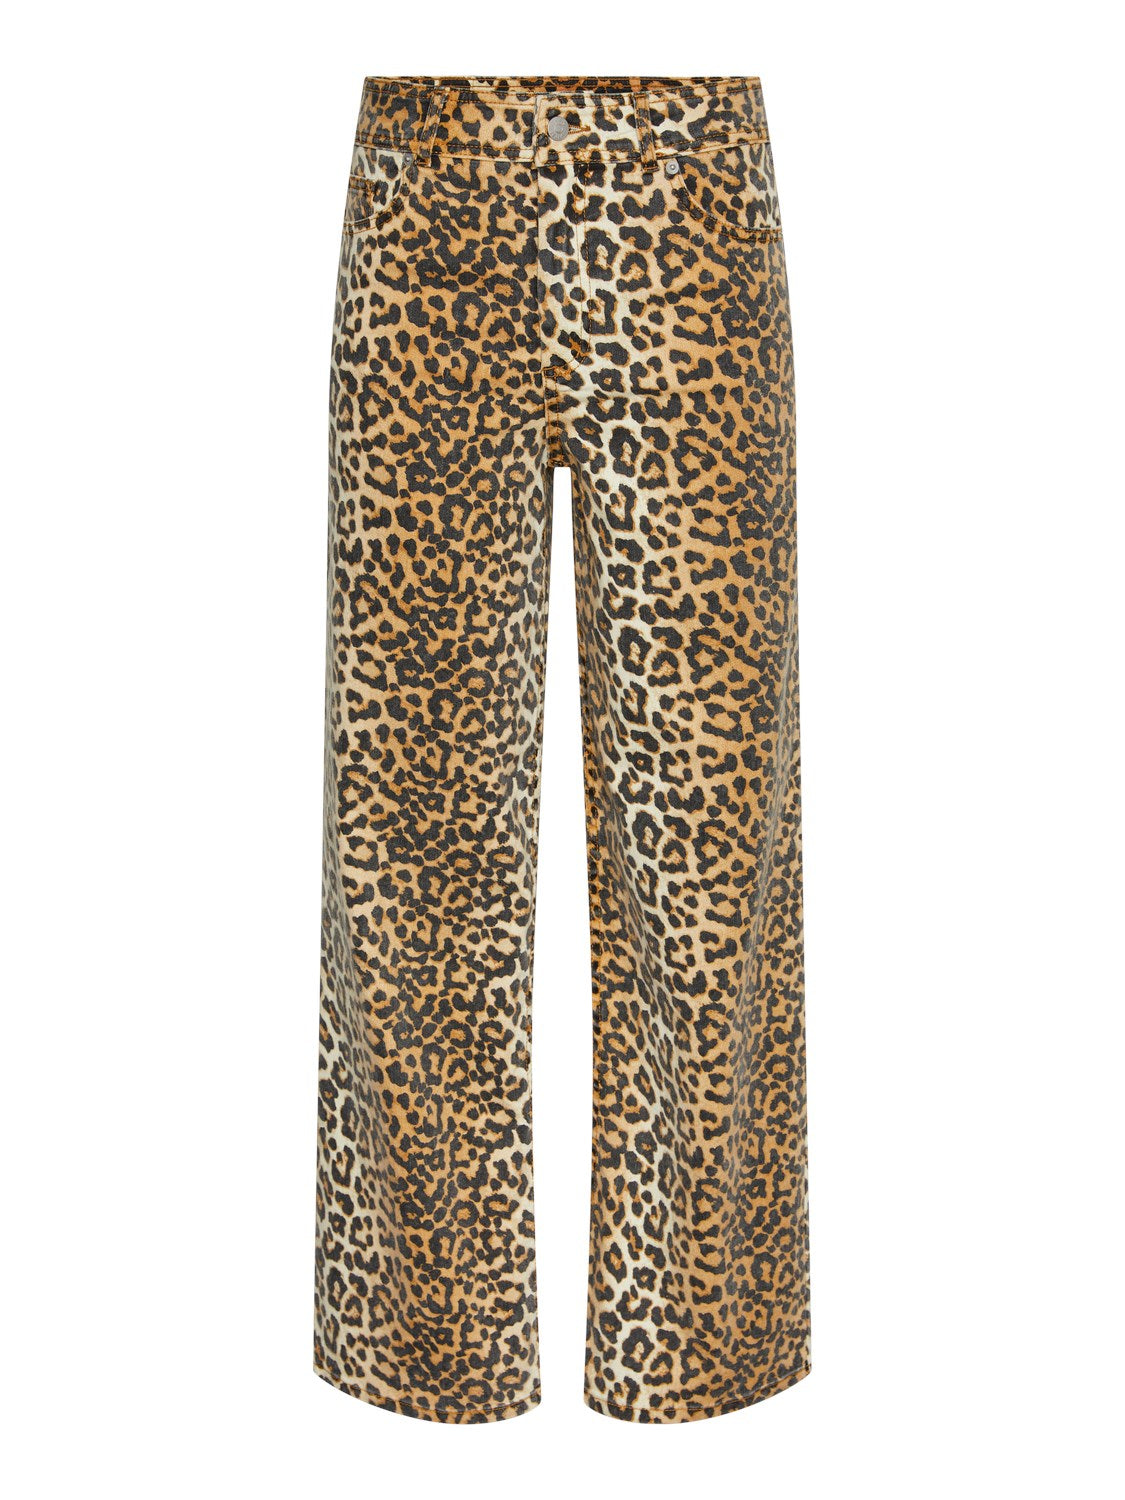 Beige Cheetah Print High Waisted Feather Pants - Beige / S